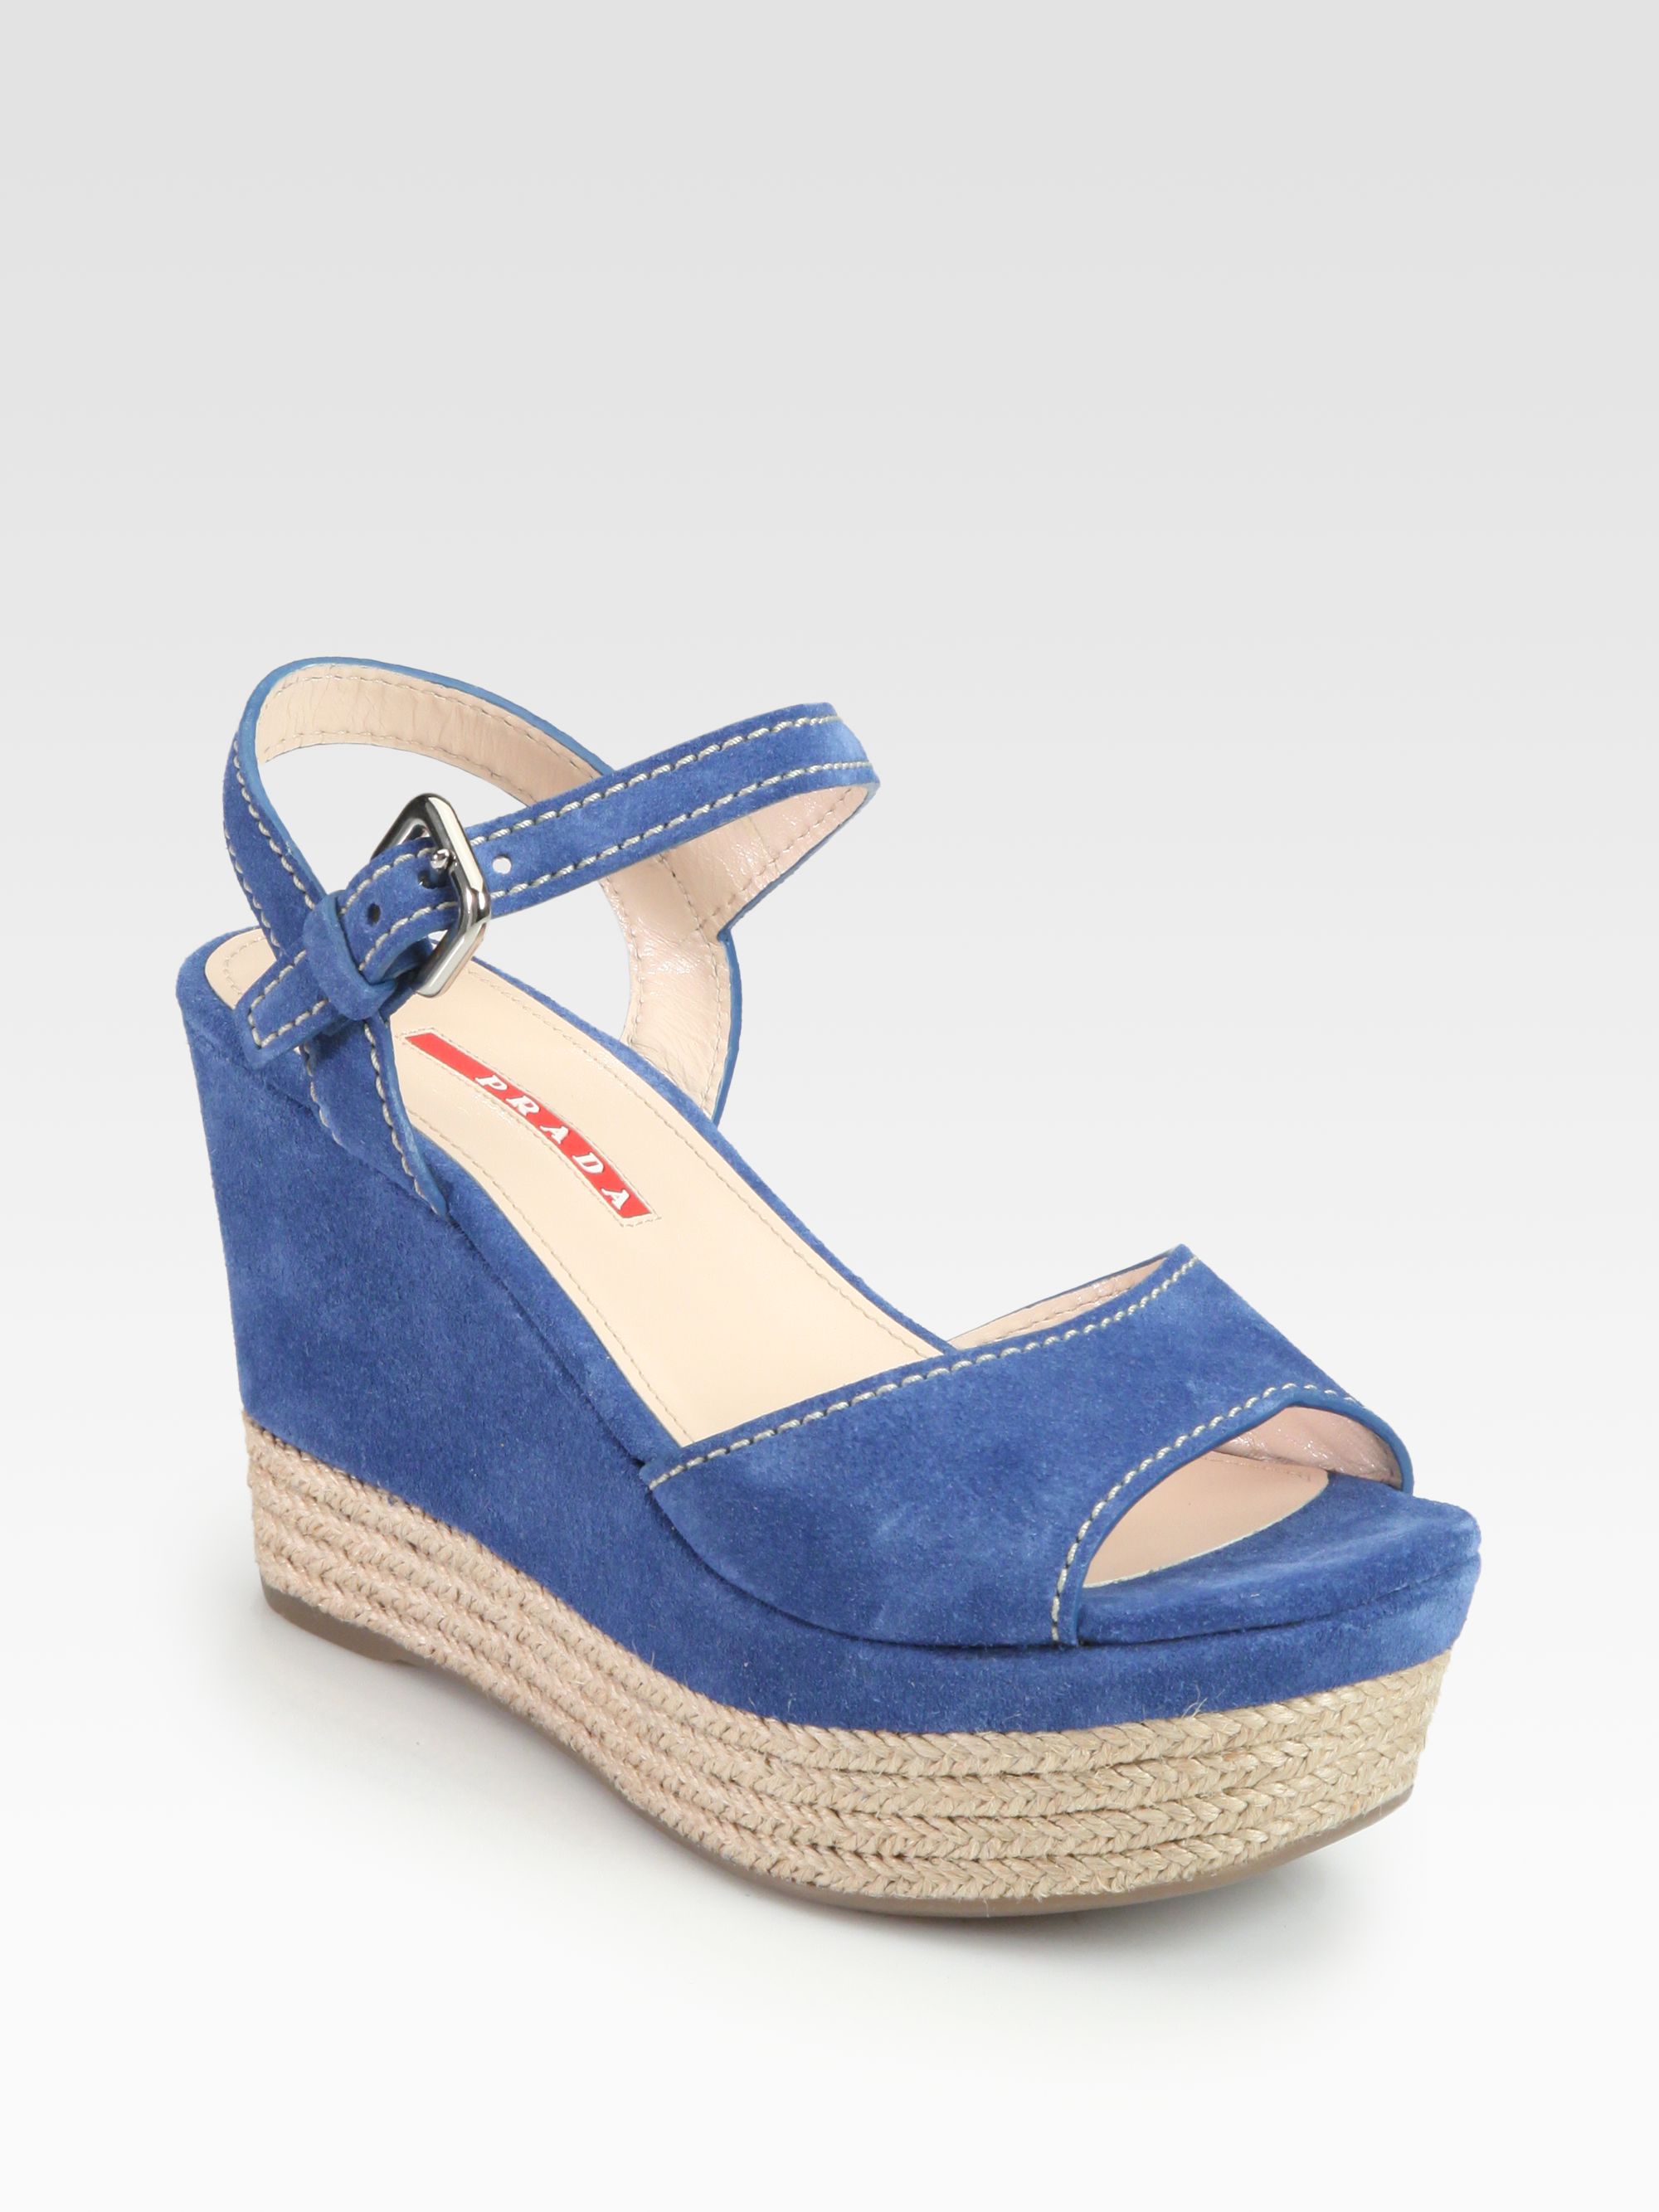 Prada Suede Espadrille Wedge Sandals in Blue (bluette) | Lyst